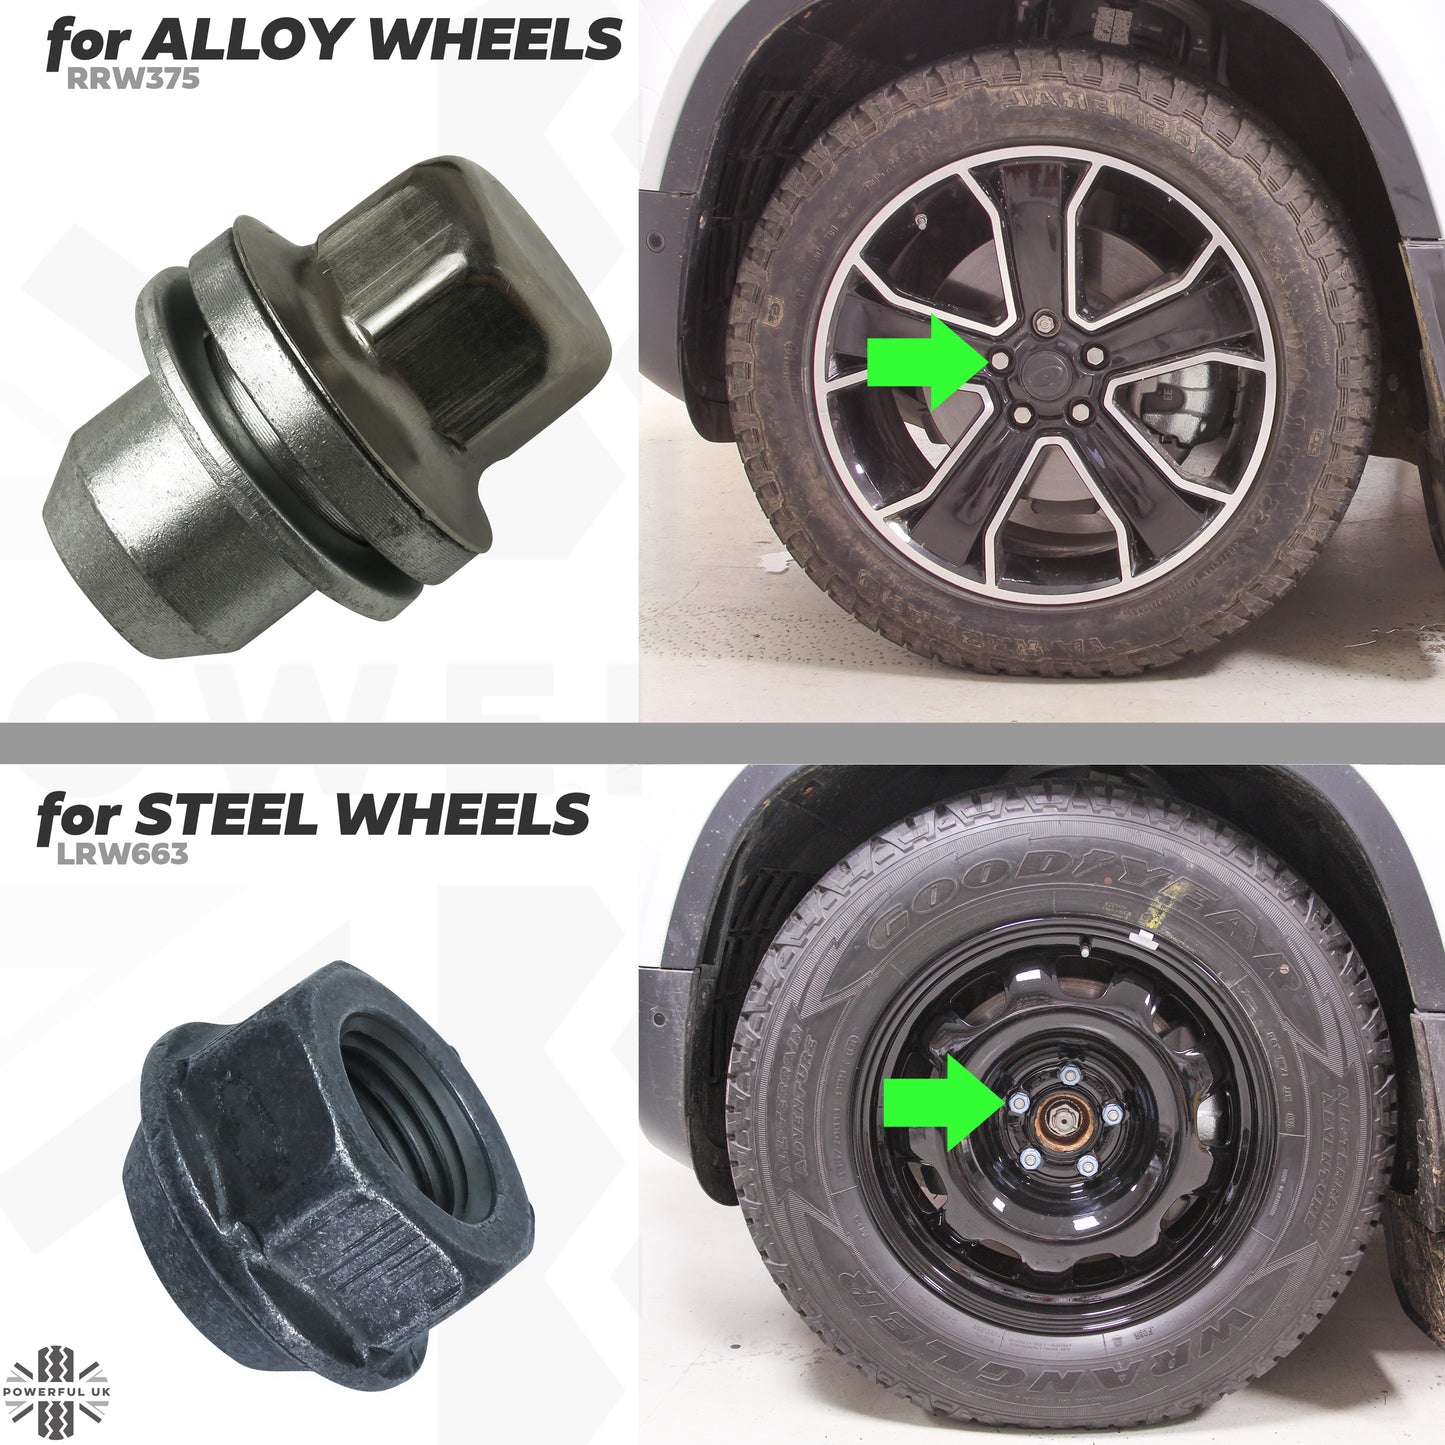 4pc Wheel nut kit for Land Rover Defender L663